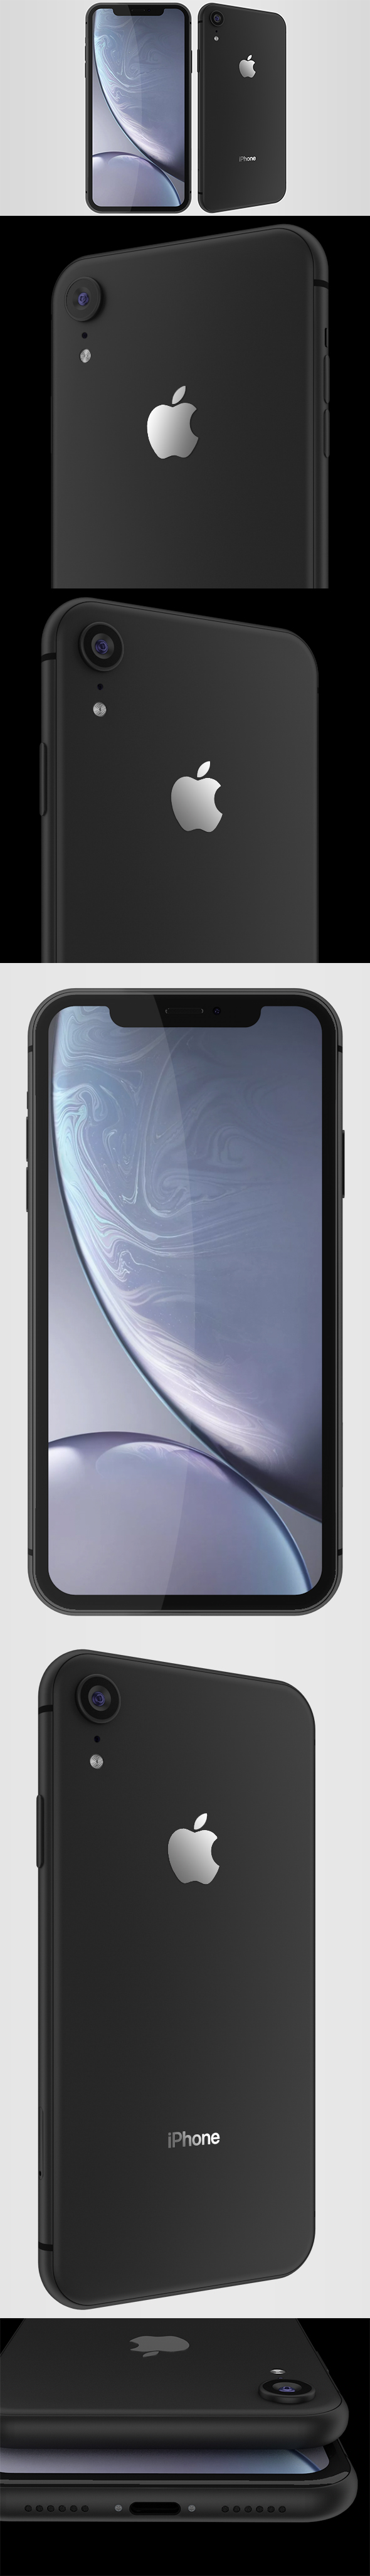 Apple Iphone XR - 3Docean 23490211